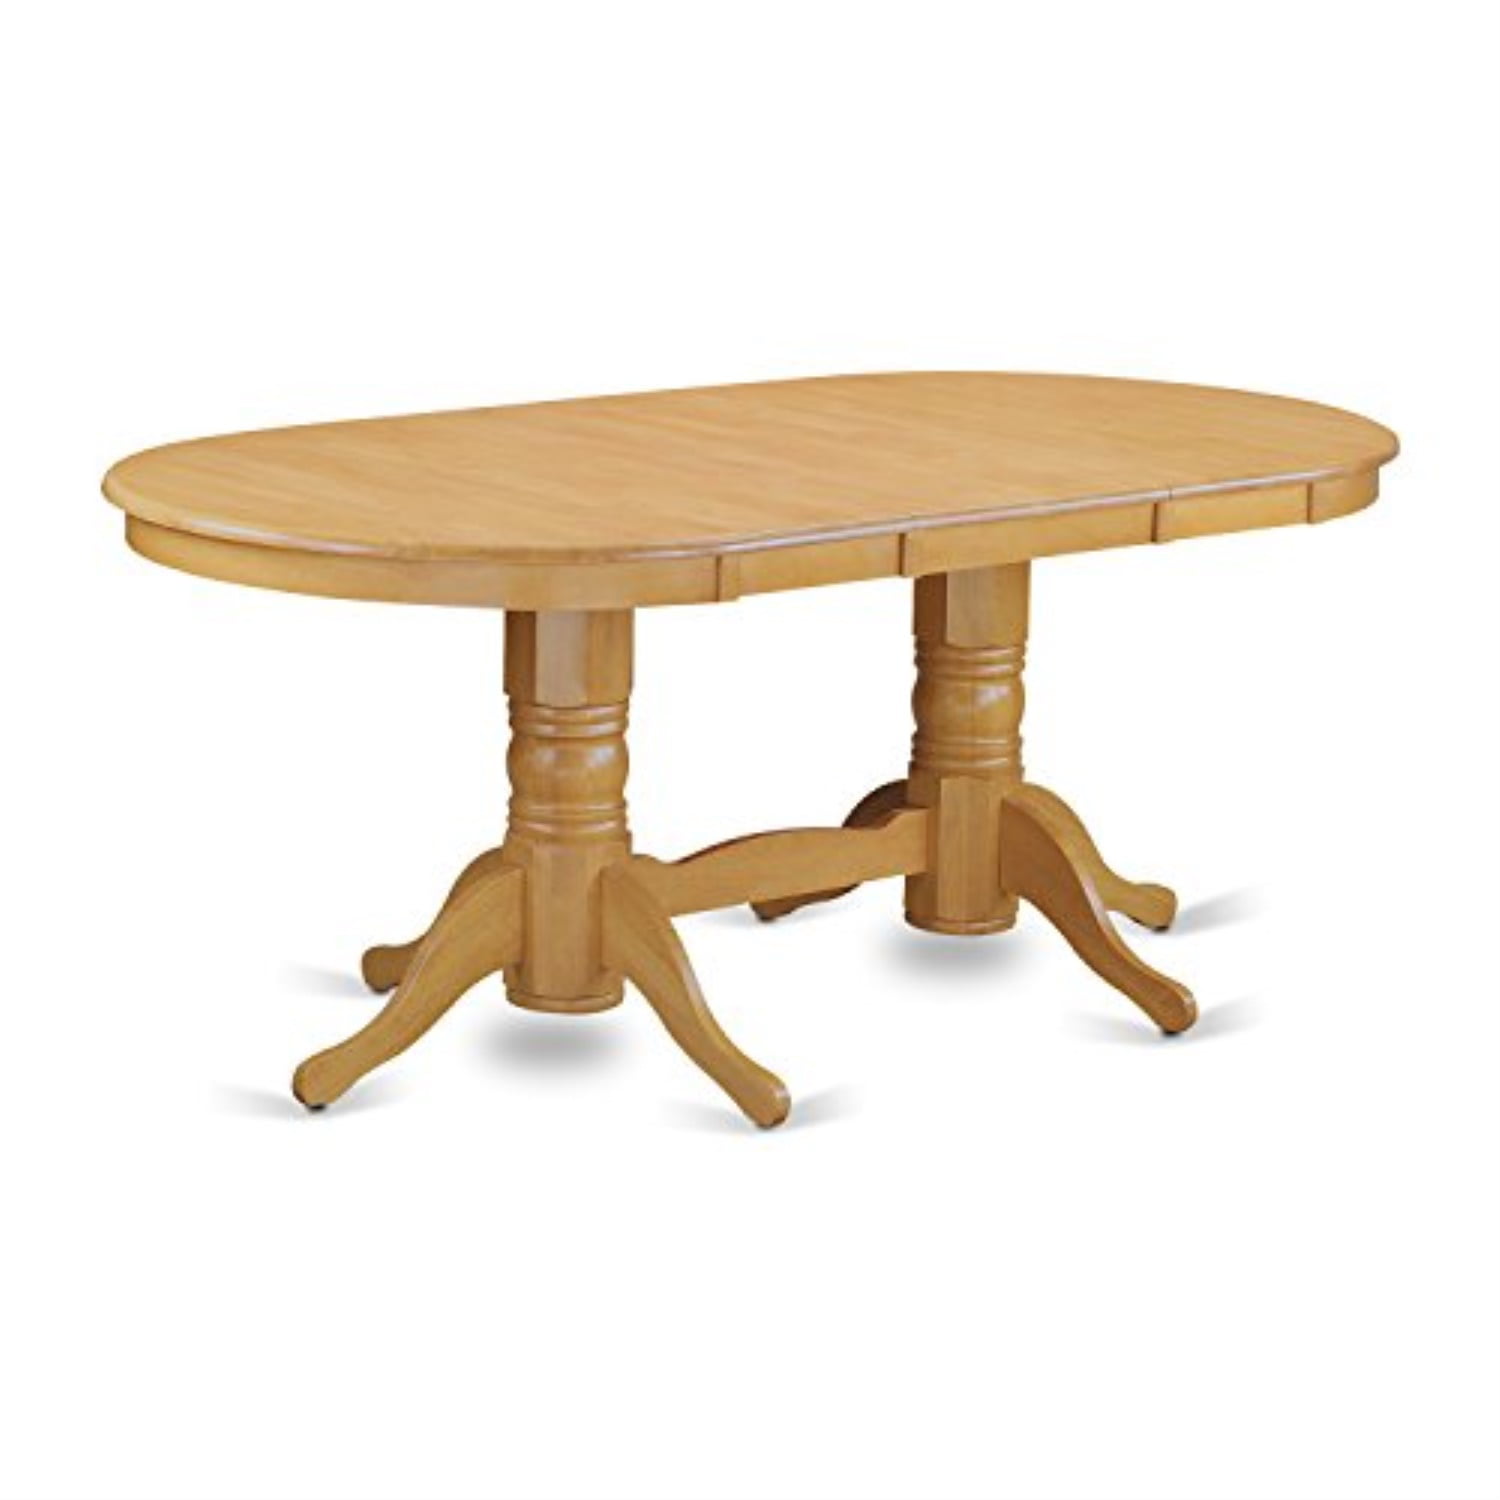 VAT-OAK-TP rectangular round corner Dining Table with 17 inch self